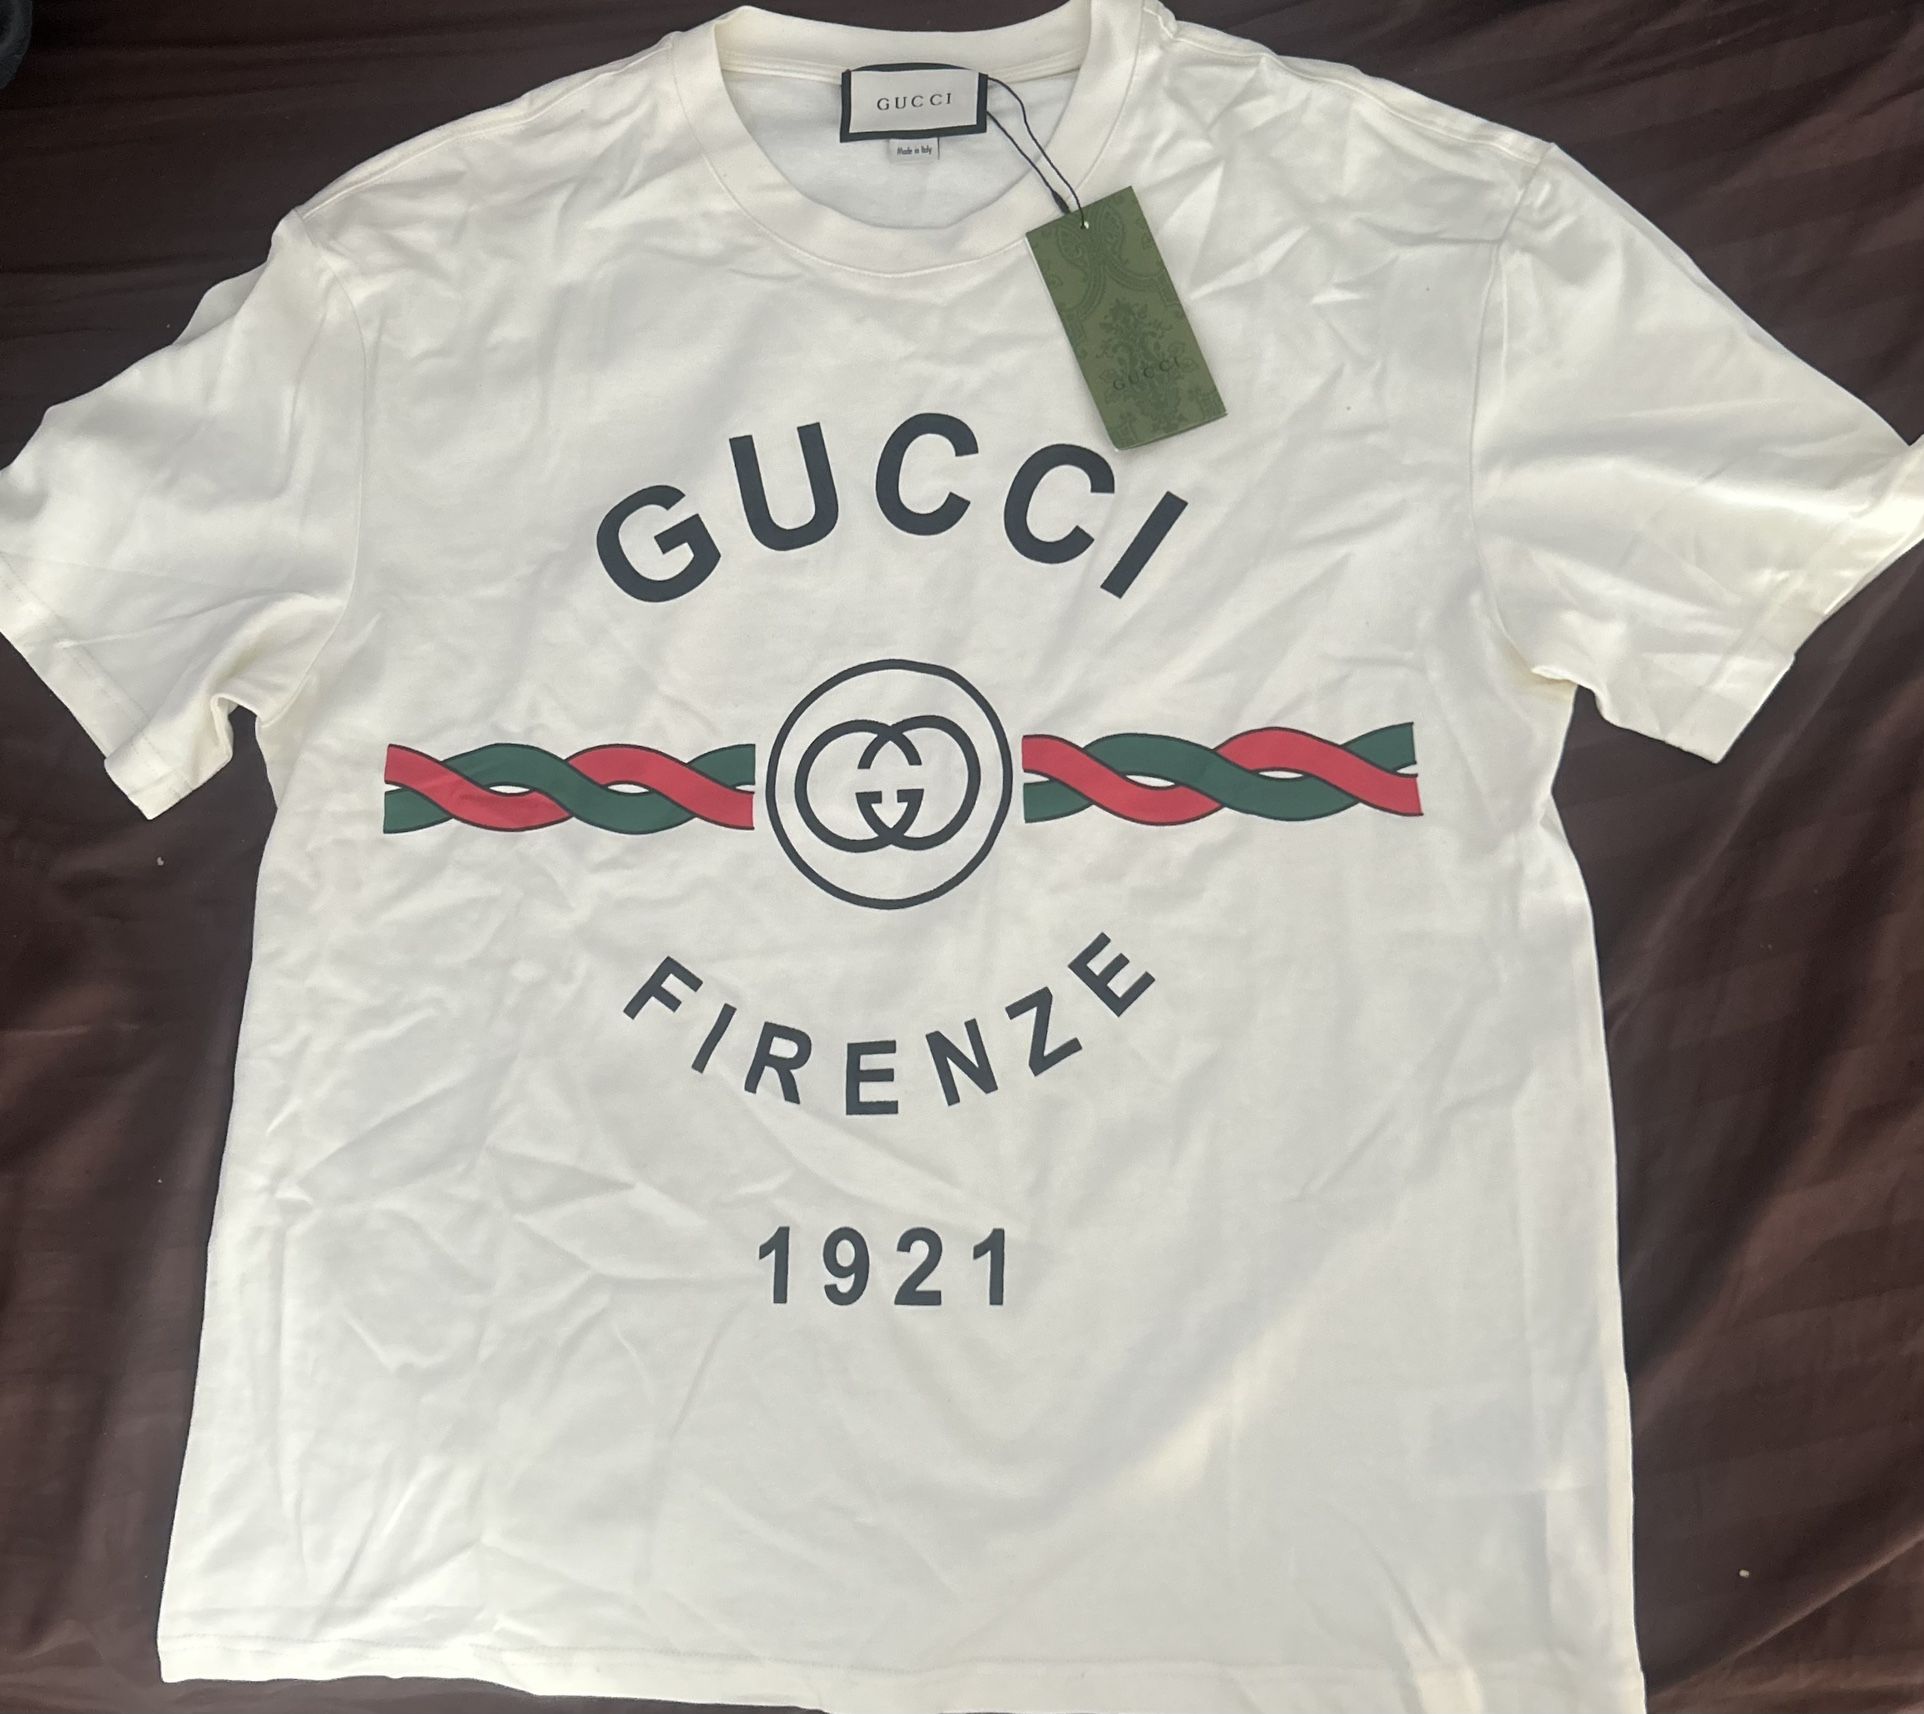 Gucci t shirt size large